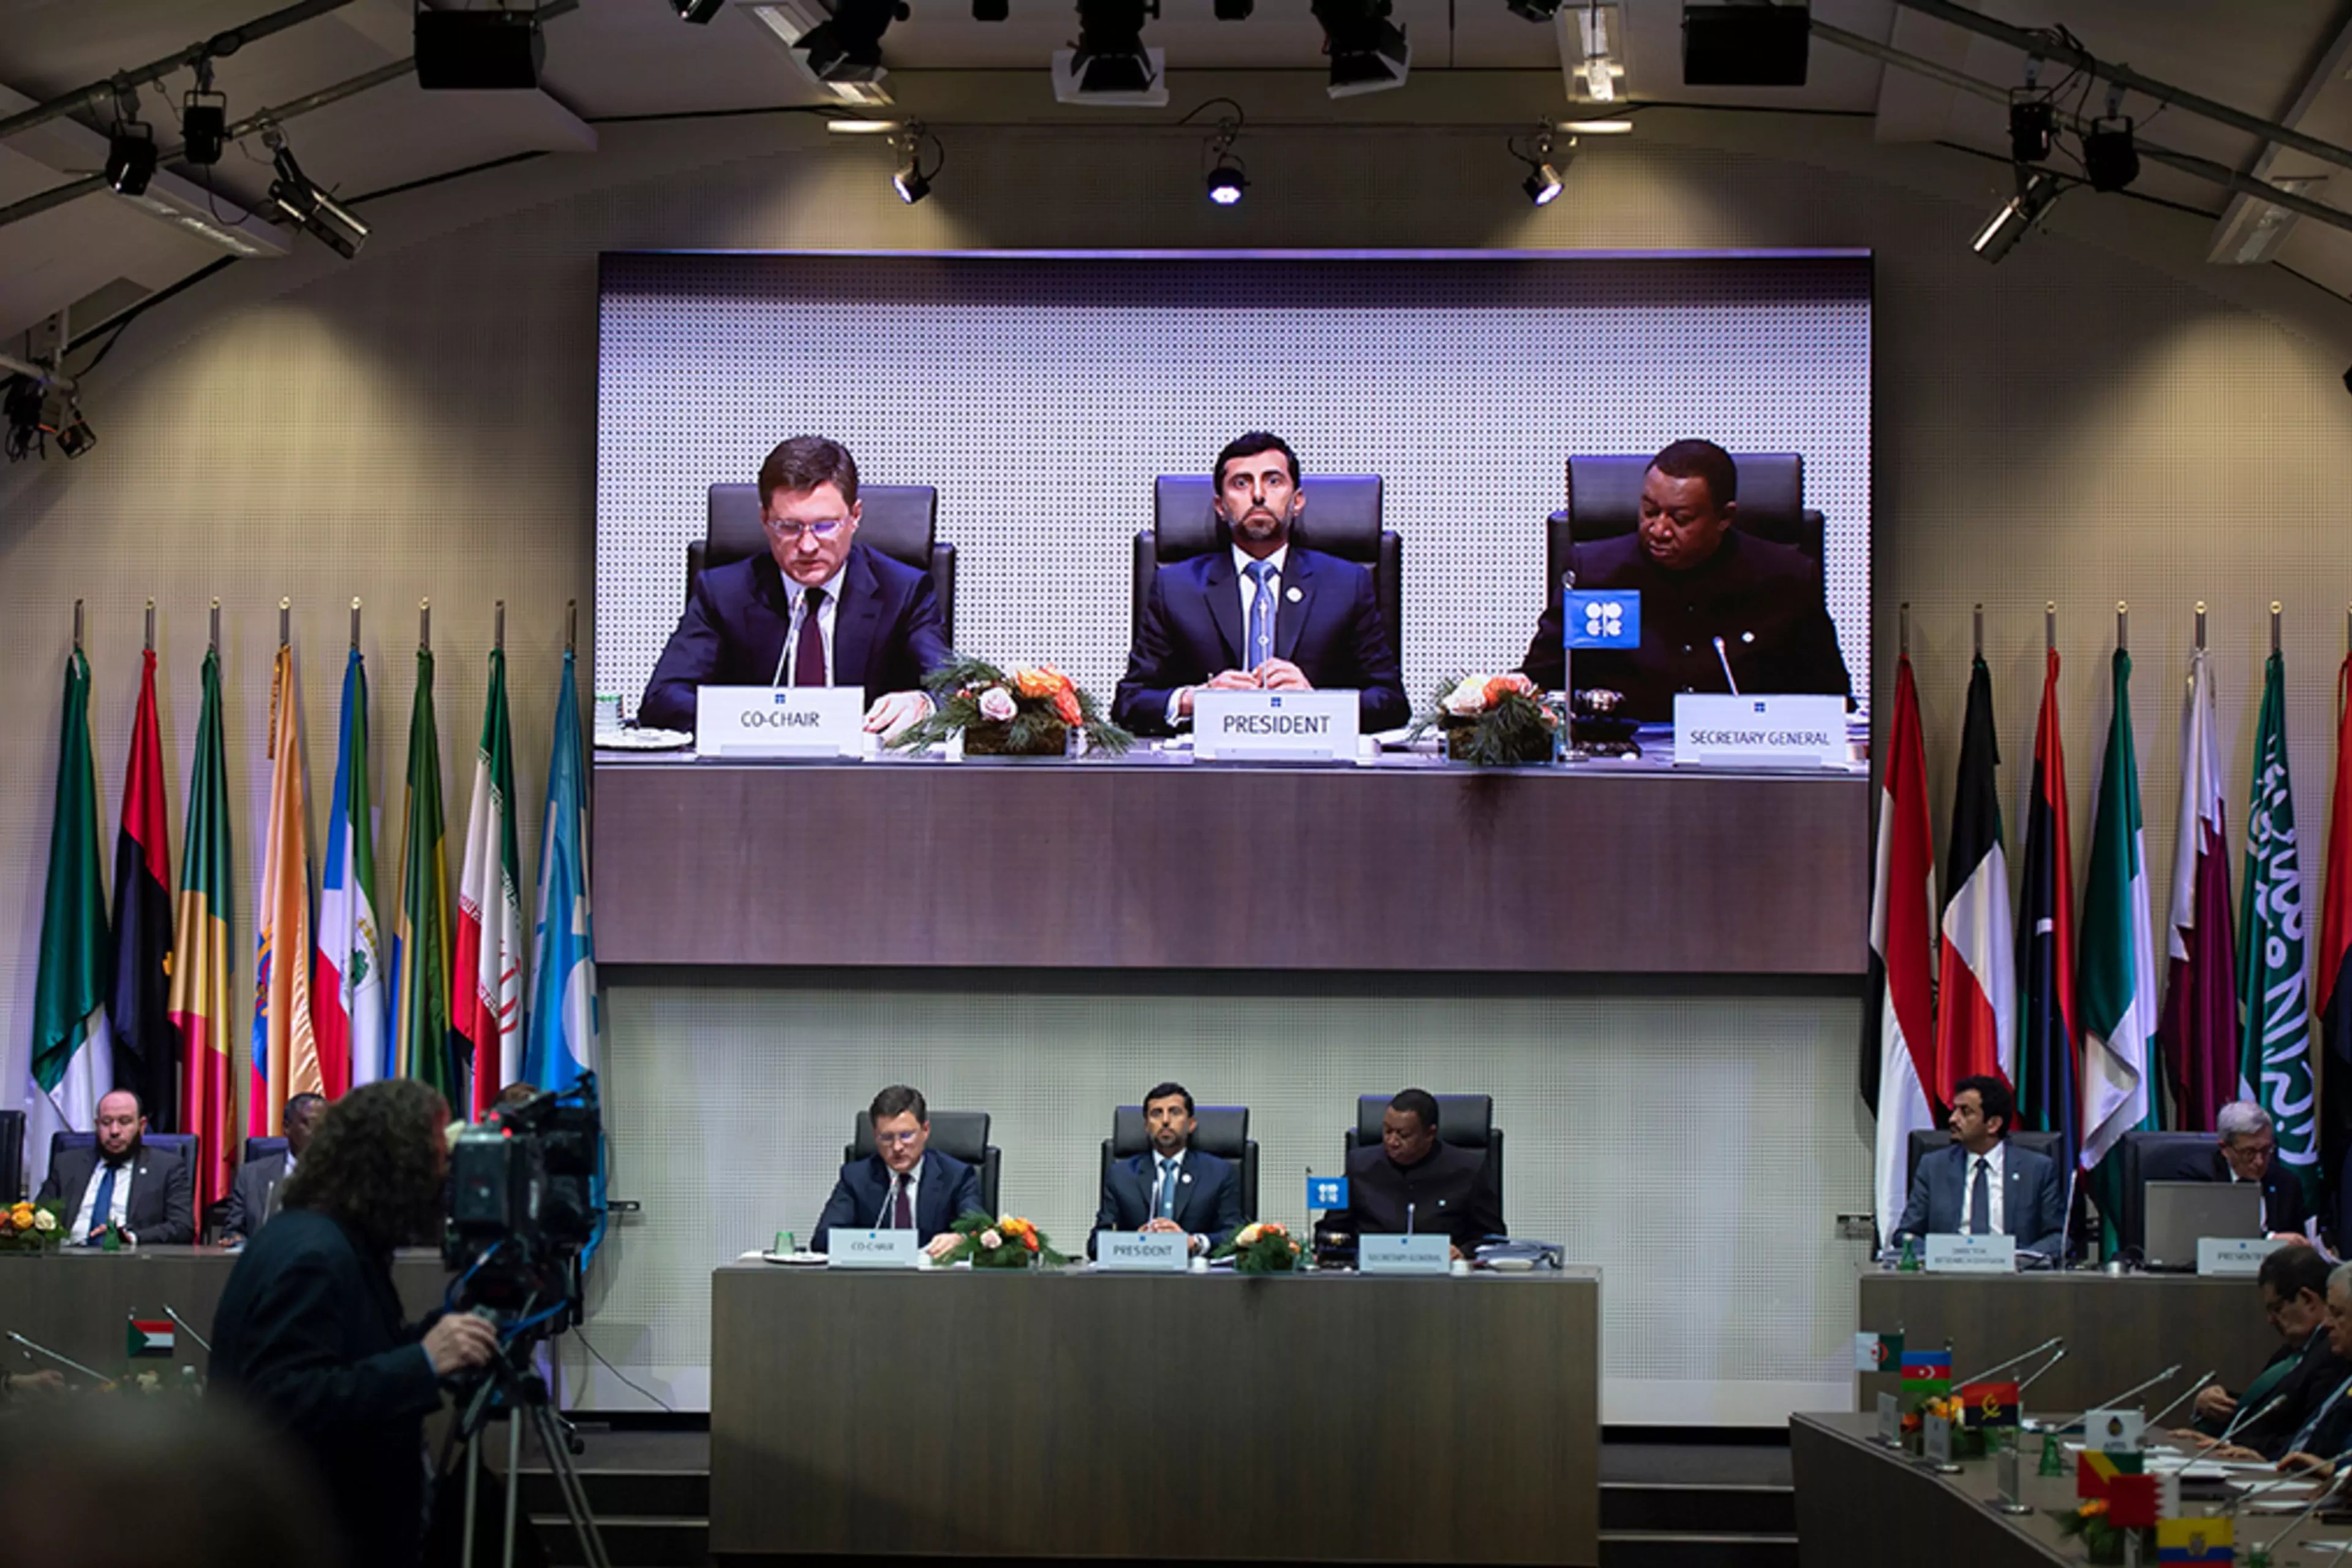 Russian and Emirati energy ministers speak alongside the OPEC secretary-general in Vienna.